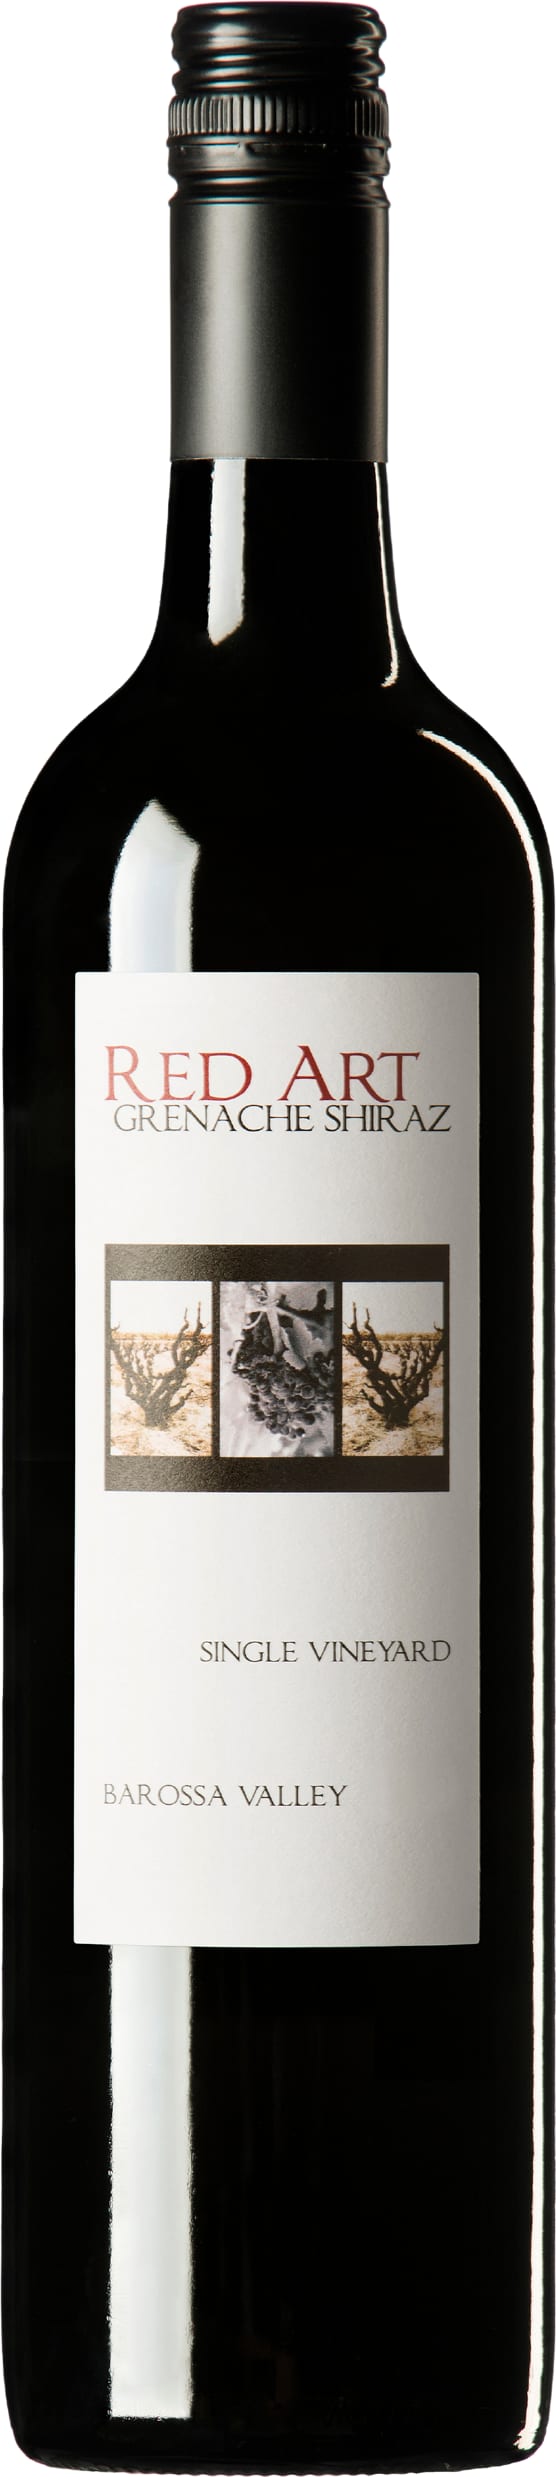 Rojomoma Red Art Grenache Shiraz 2006 6x75cl - Just Wines 